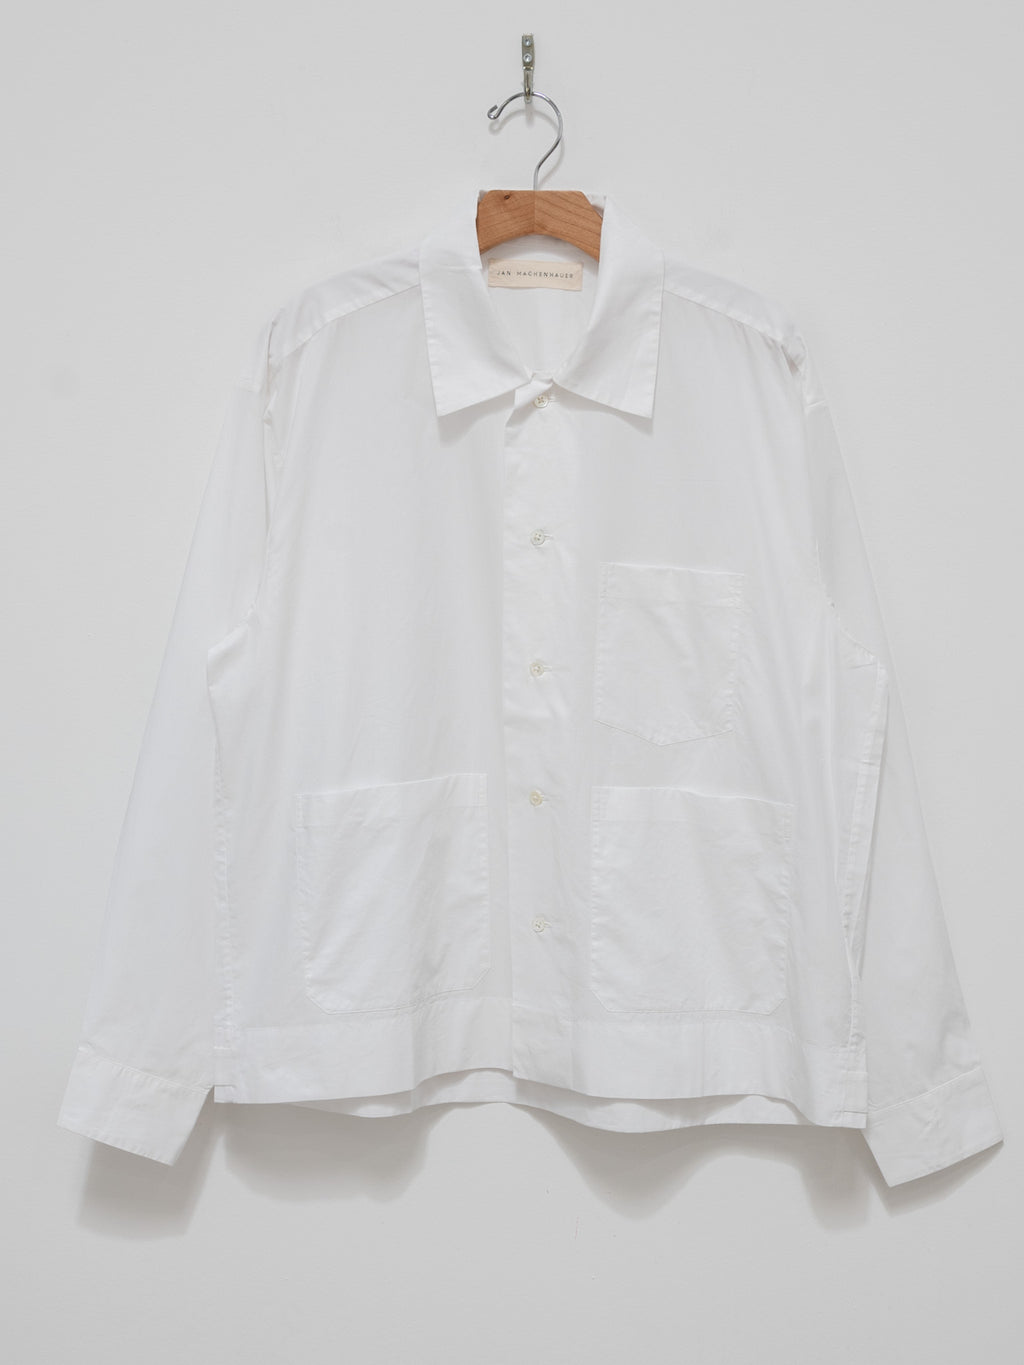 Namu Shop - Jan Machenhauer Frank Shirt - White Cotton Poplin